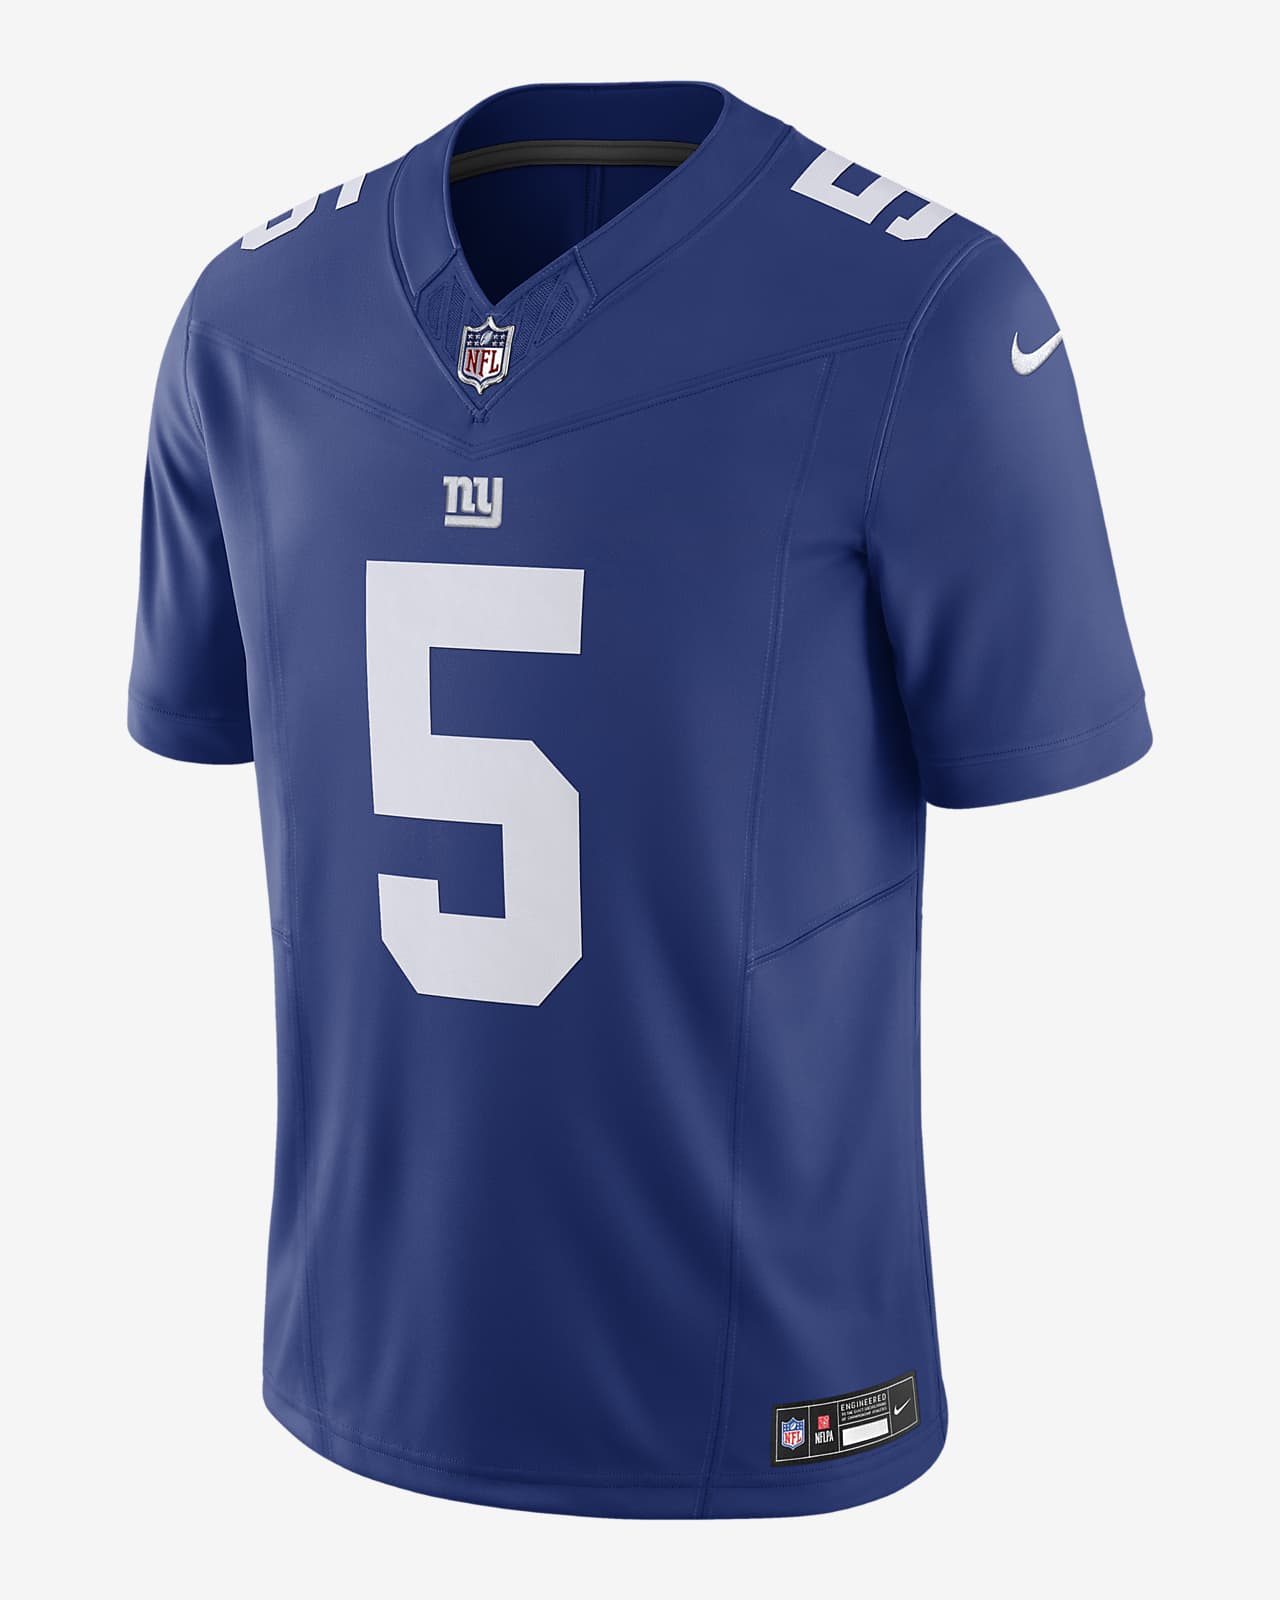 Kayvon Thibodeaux New York Giants Men's Nike Dri-FIT NFL Limited Football Jersey